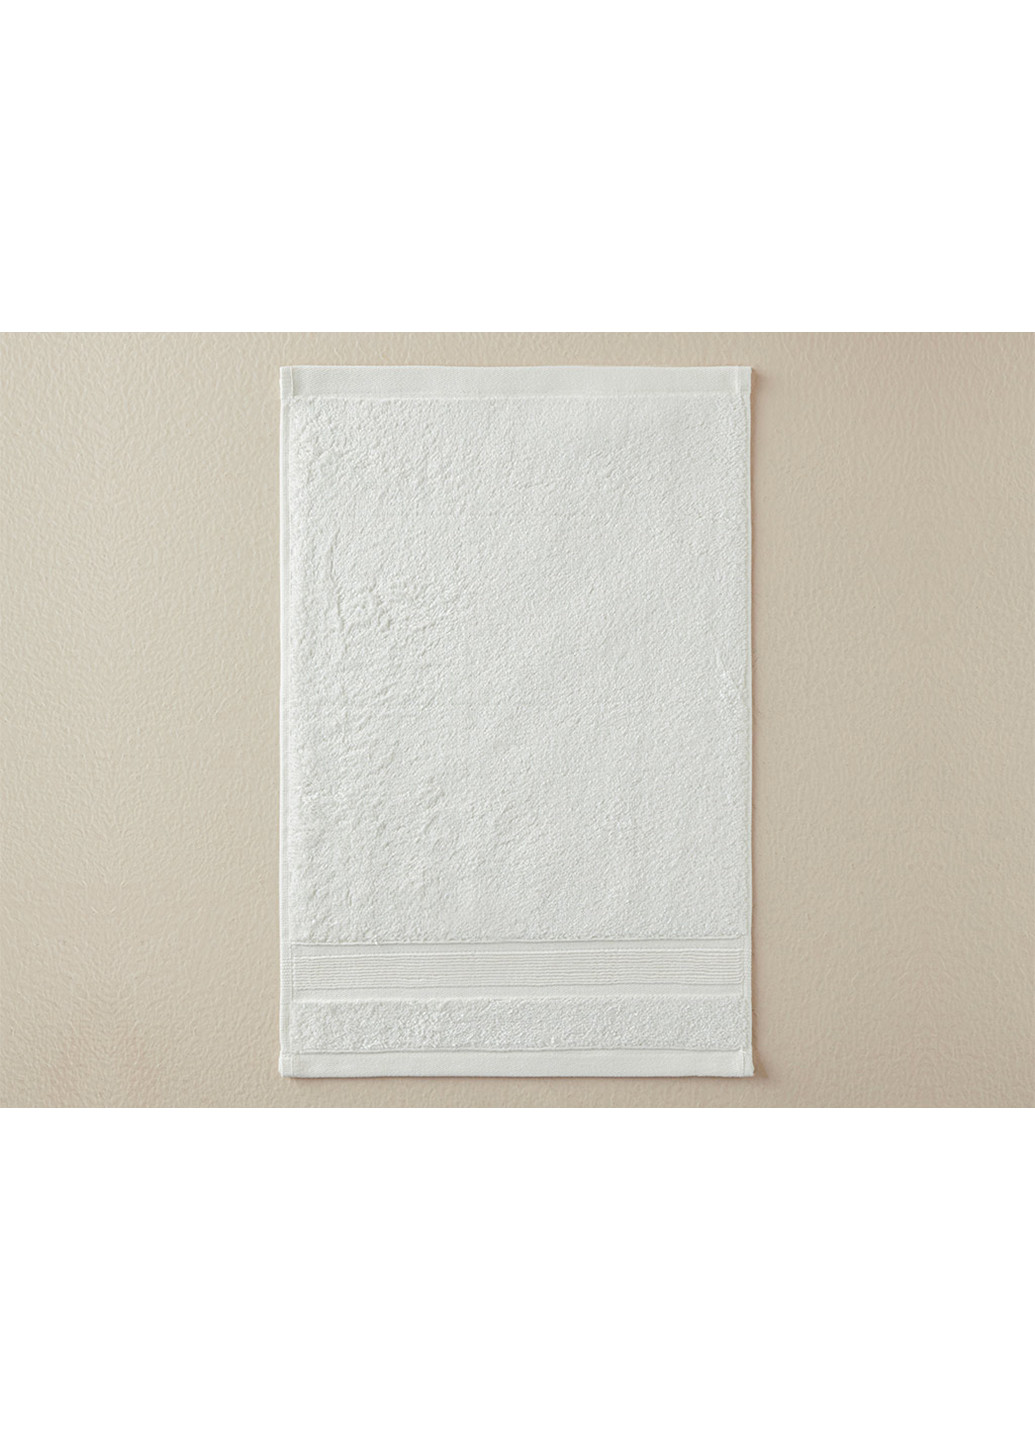 English Home полотенце для рук, 30х45 см однотонный белый производство - Турция